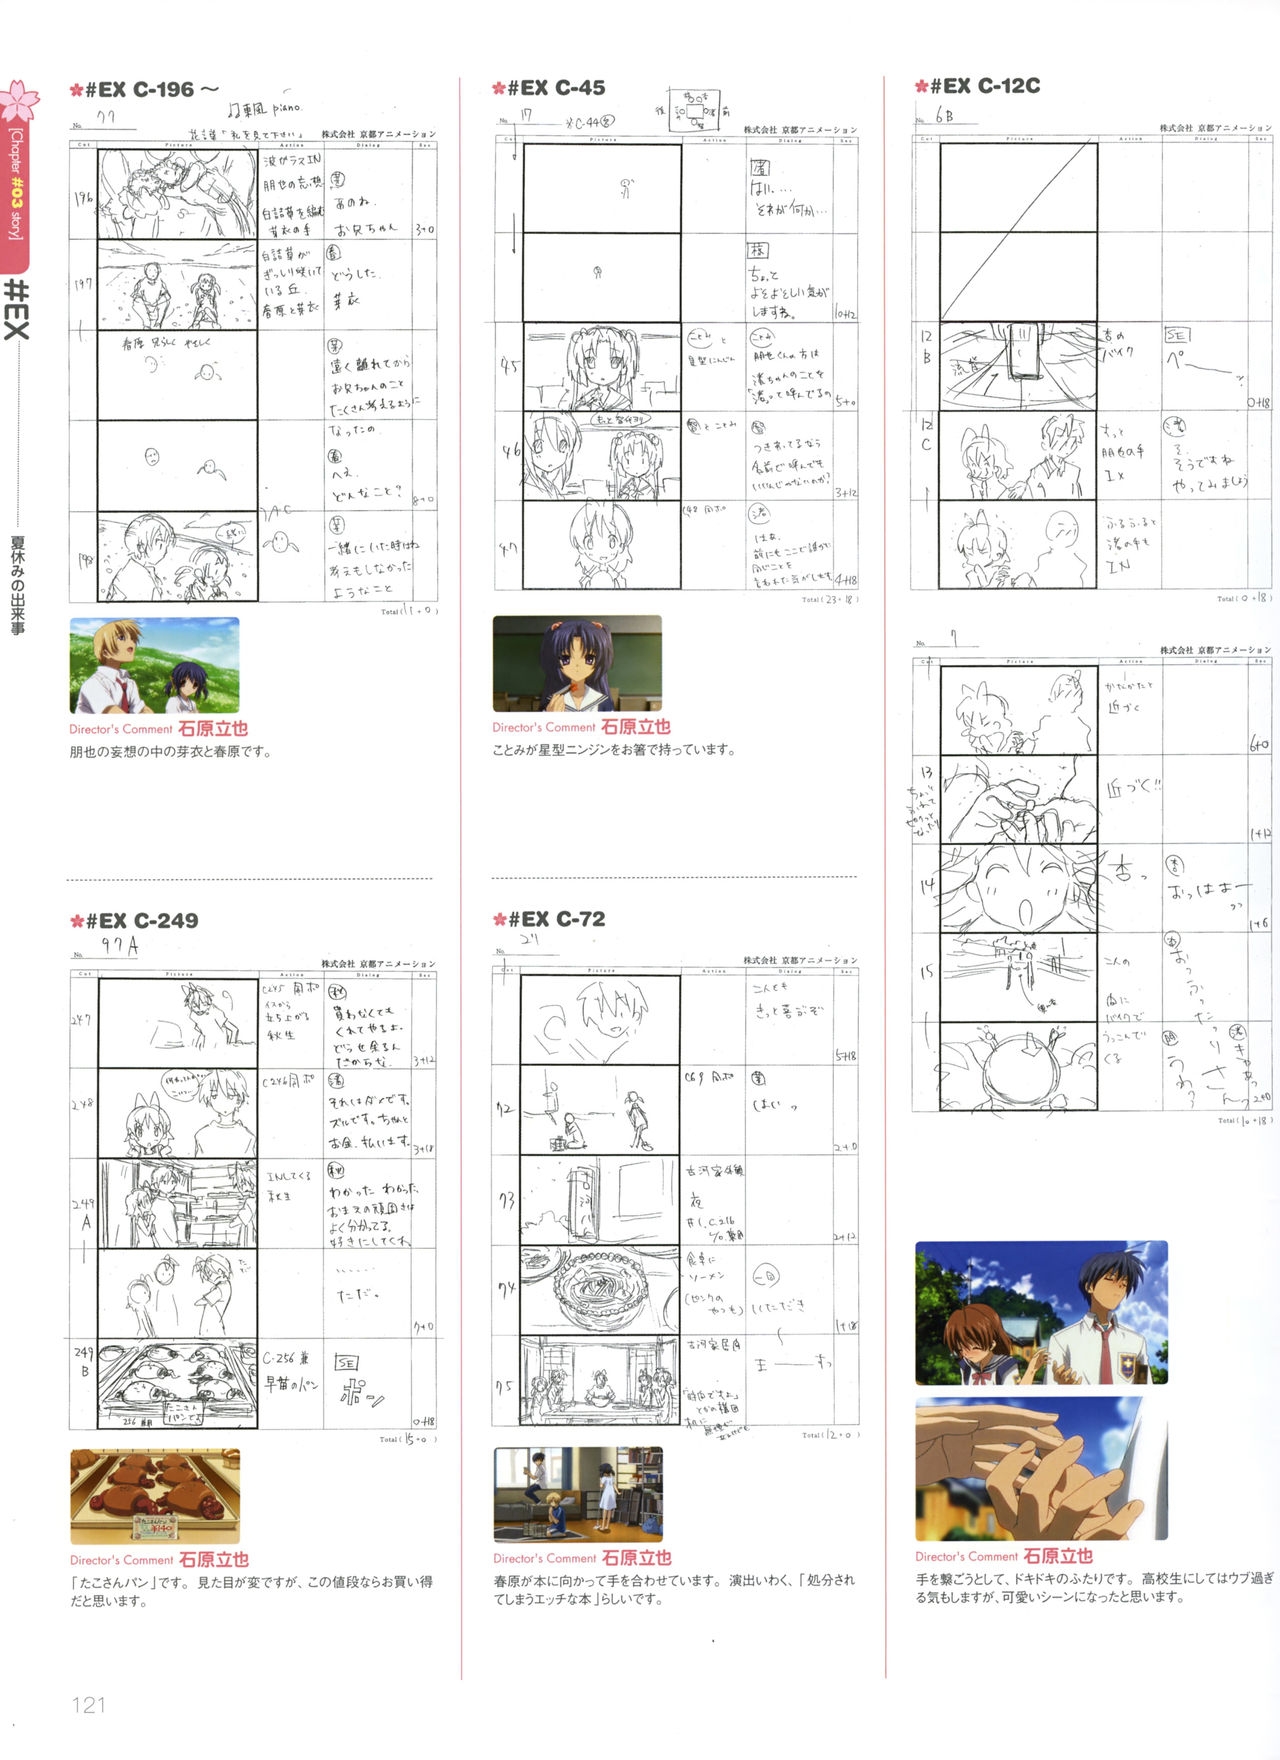 Clannad TV Animation Visual Fan Book 124